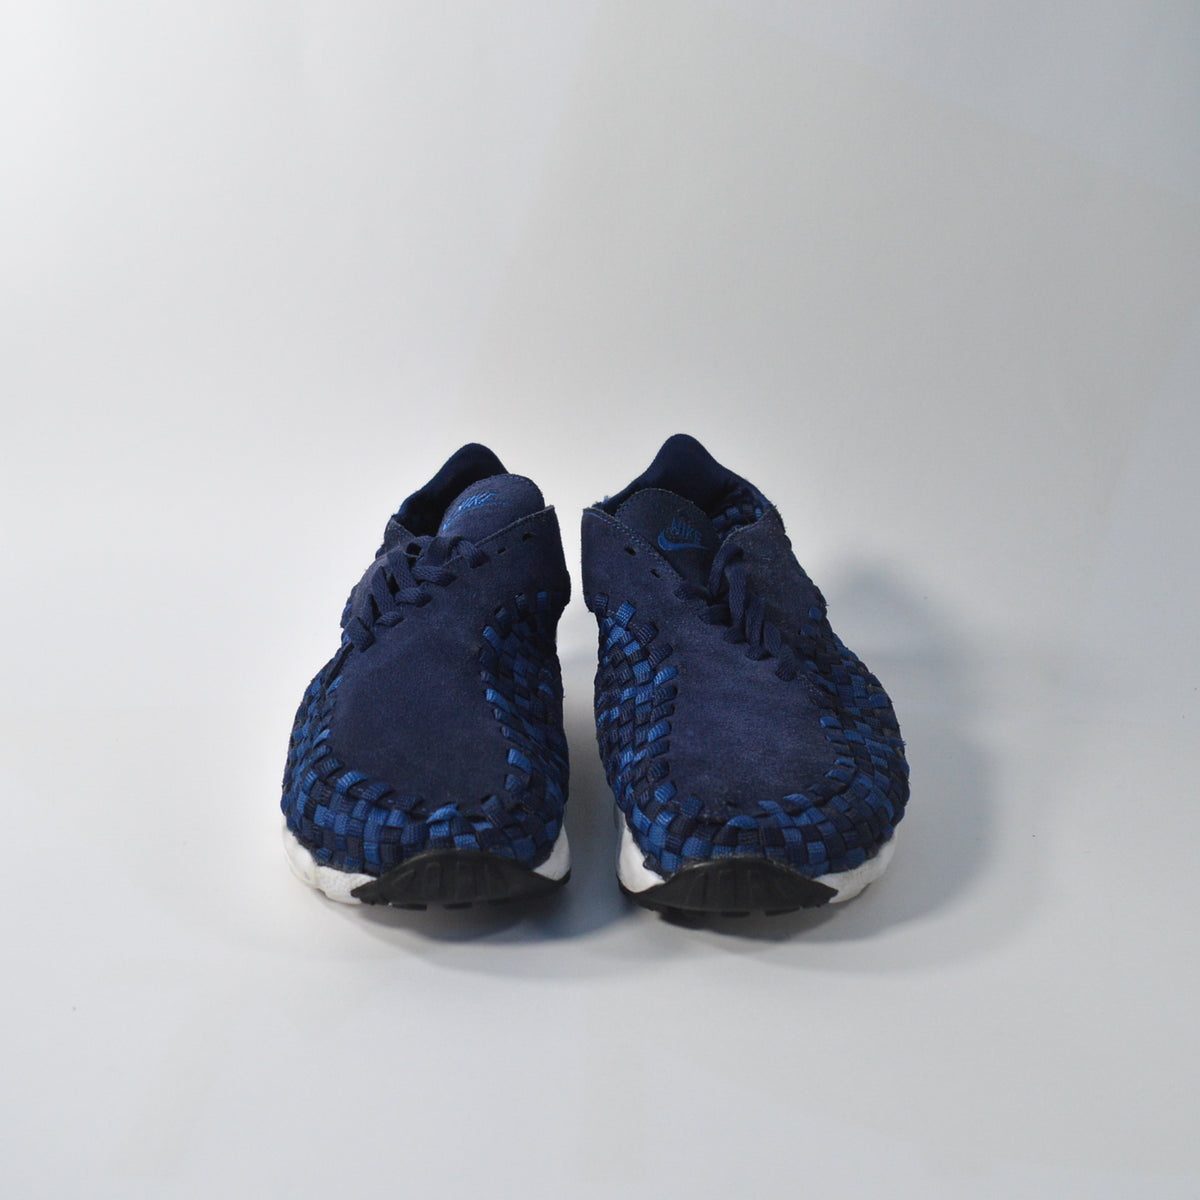 REC0503 NIKE FOOTSCAPE NM - BINARY BLUE - UK 9